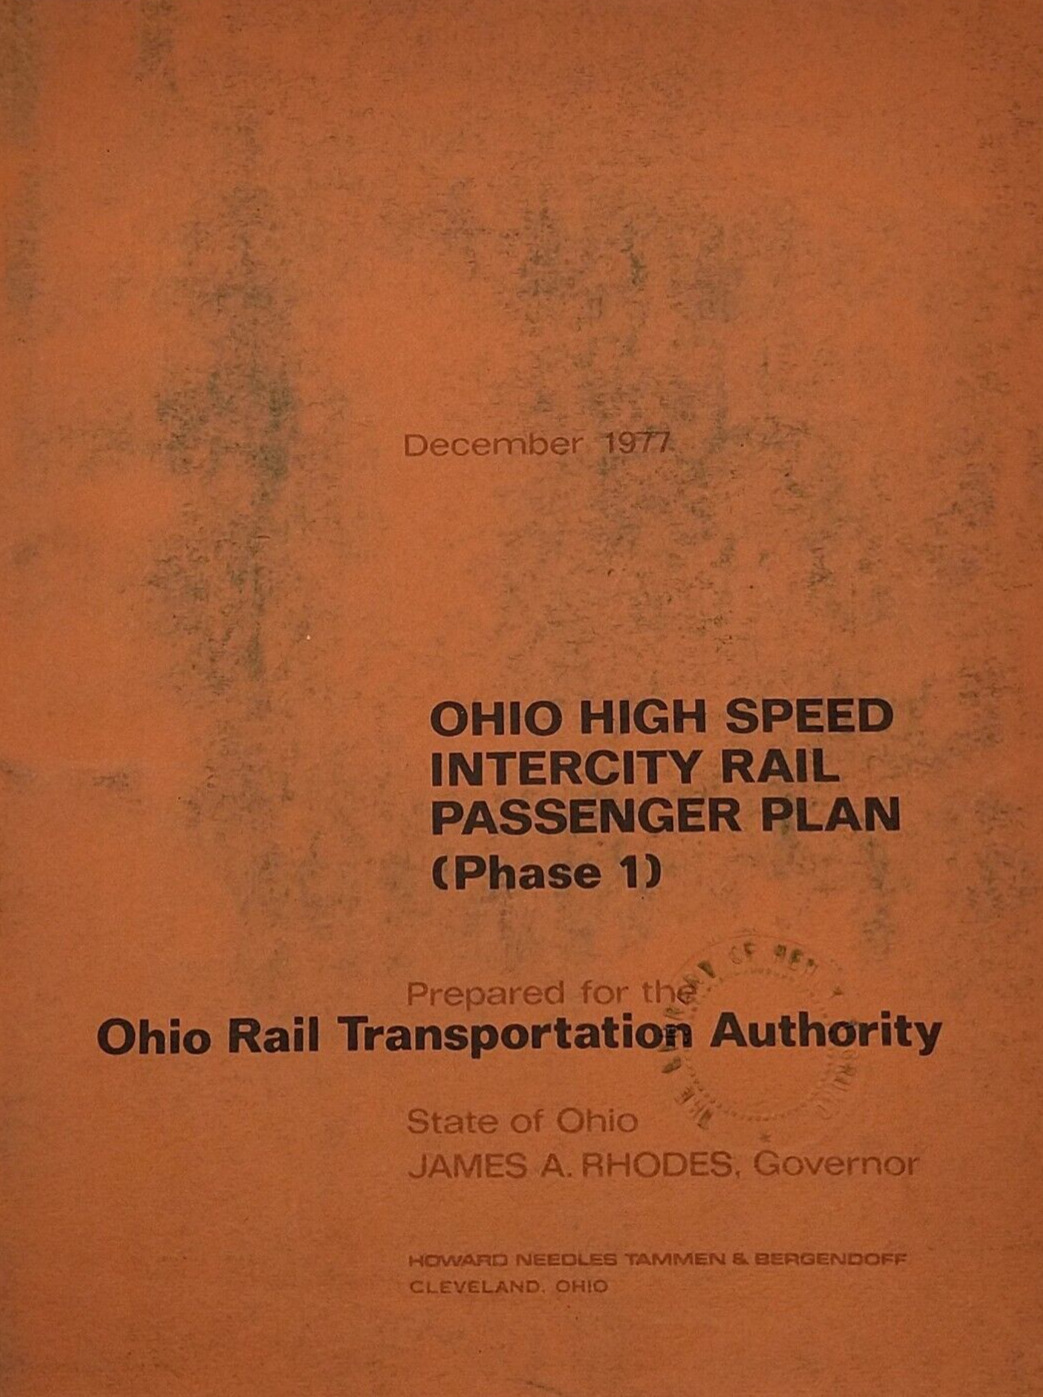 OHIO High Speed Intercity Rail Passenger Plan 1977 Phase 1 Comprehensive Report